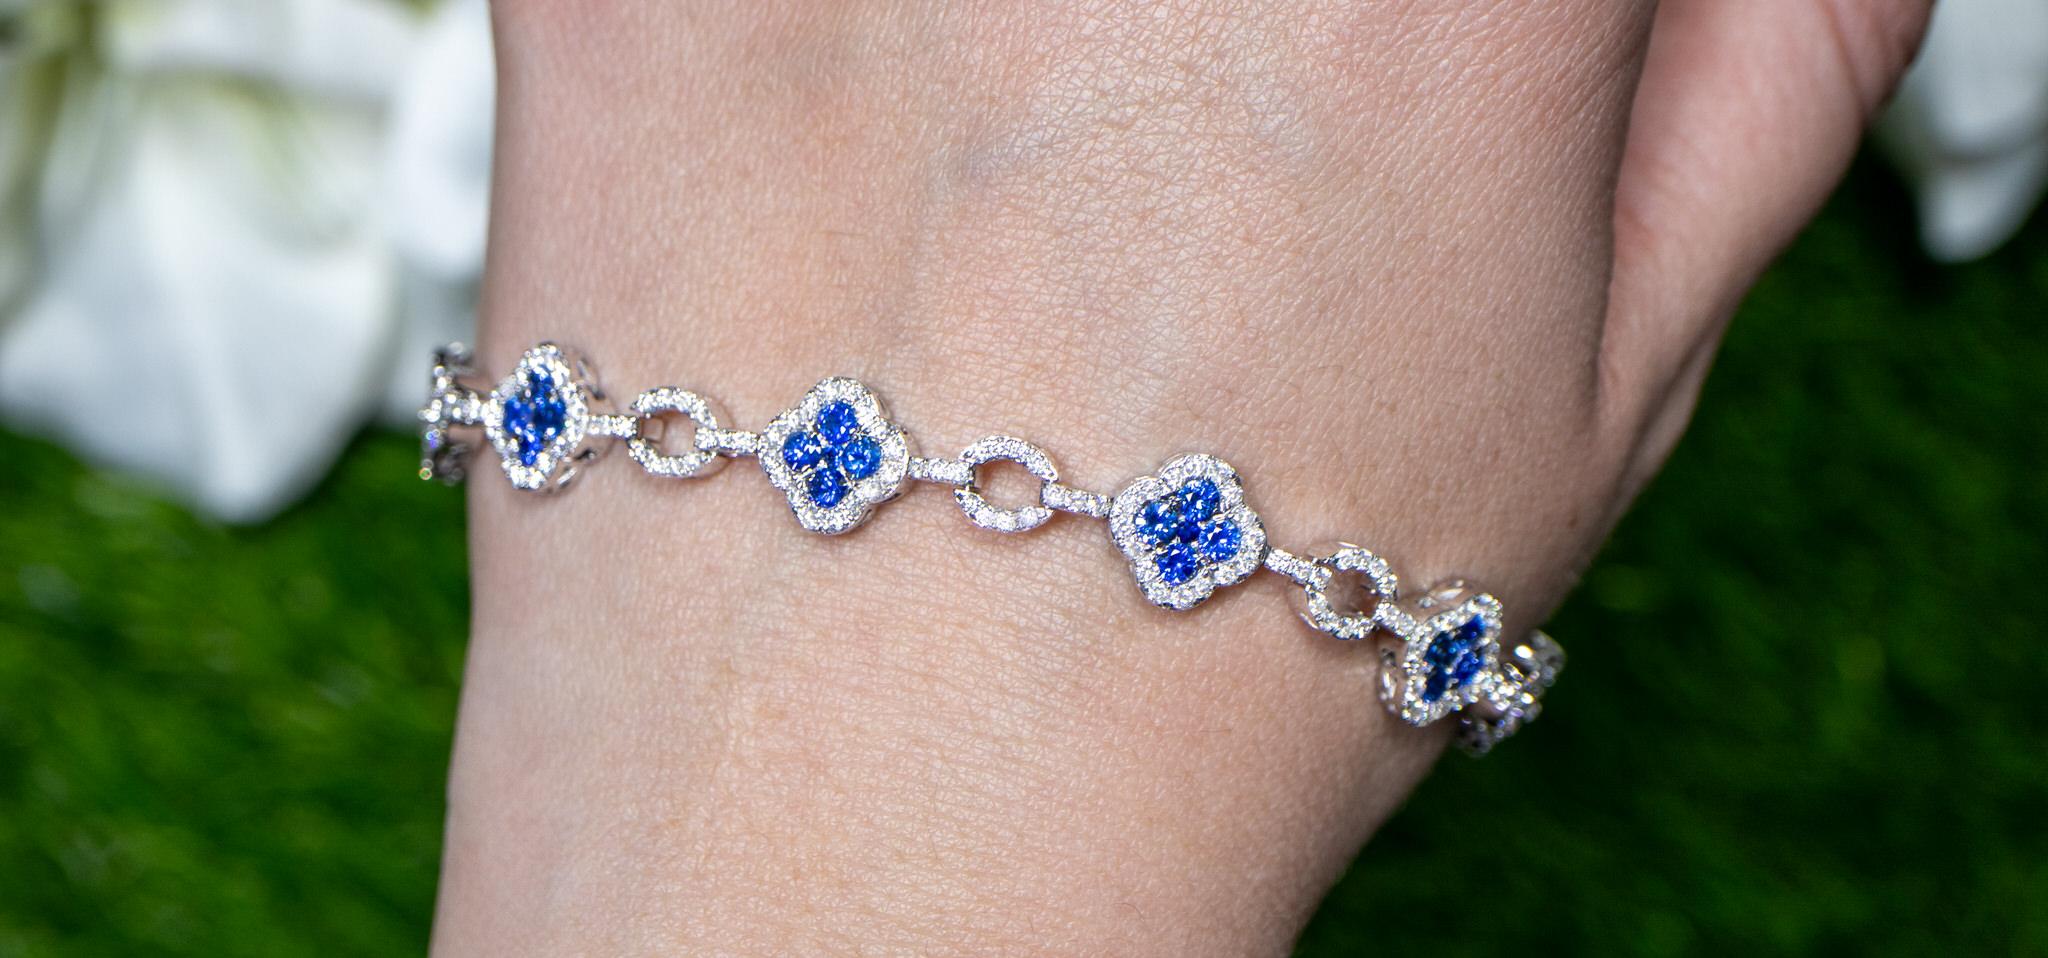 Round Cut Clover Sapphire Bracelet Diamond Links 5.38 Carats 18K White Gold For Sale